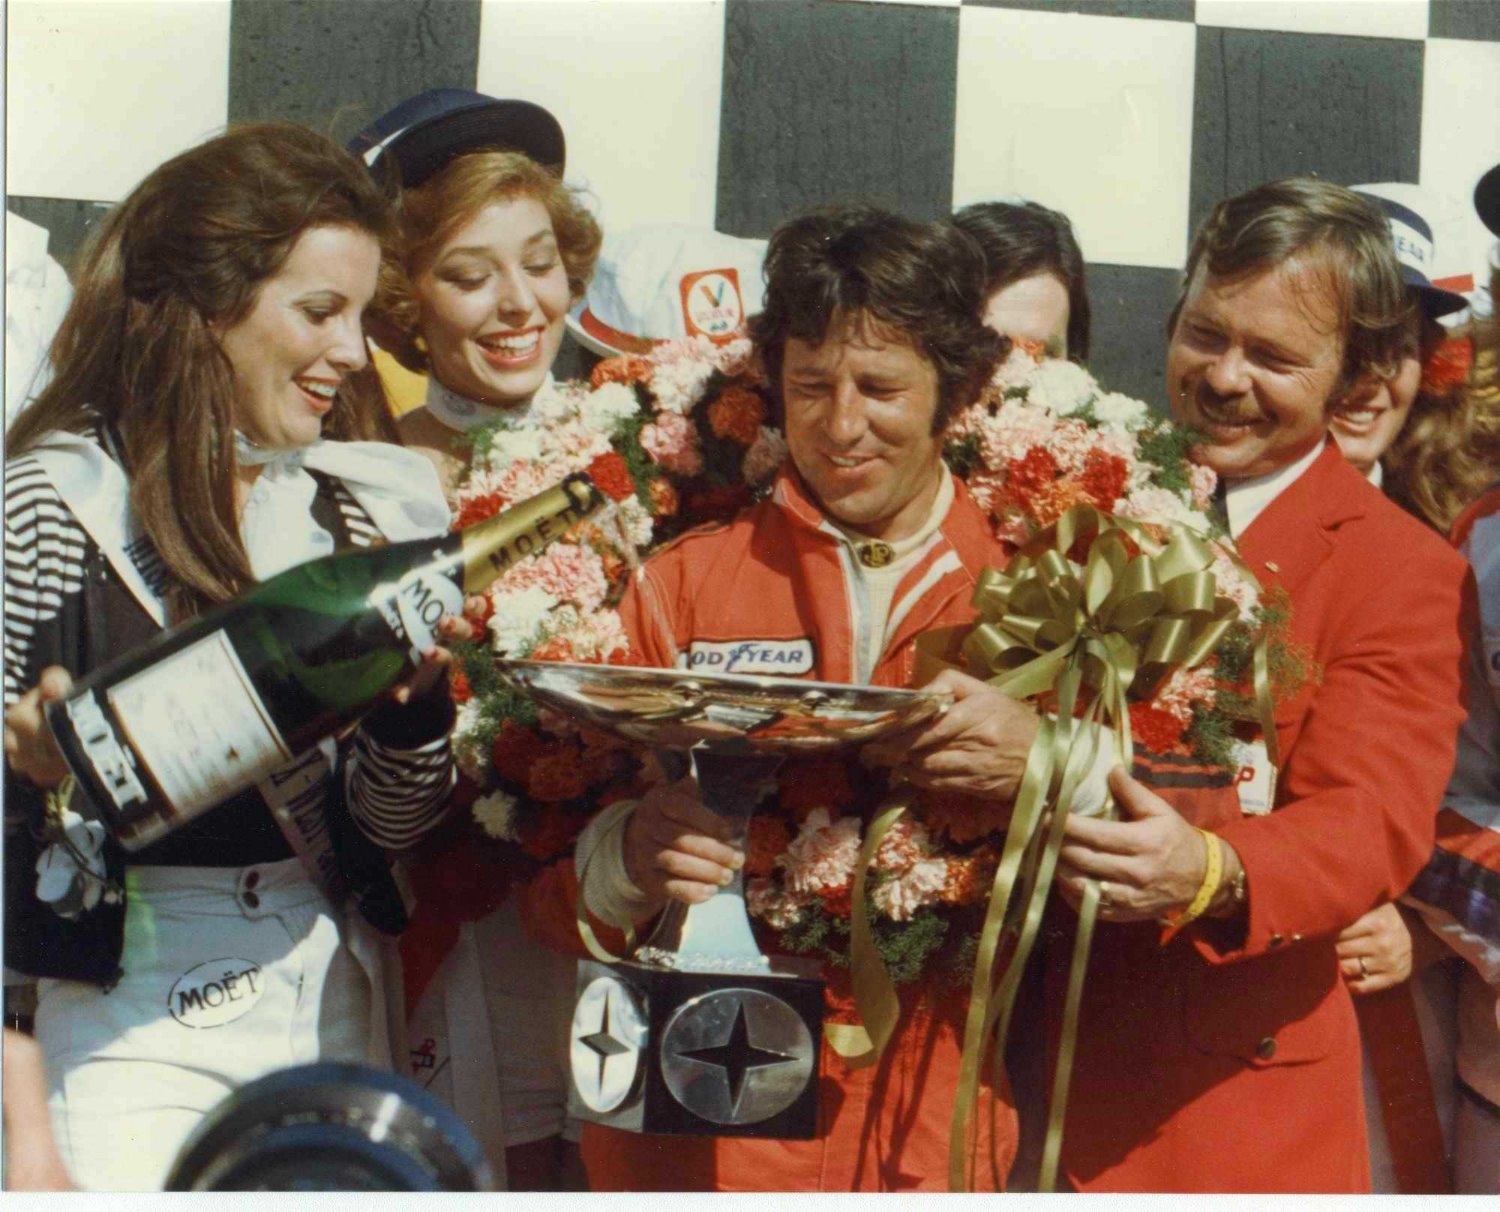 Mario Andretti wins Long Beach in 1977 - it was an F1 race back then